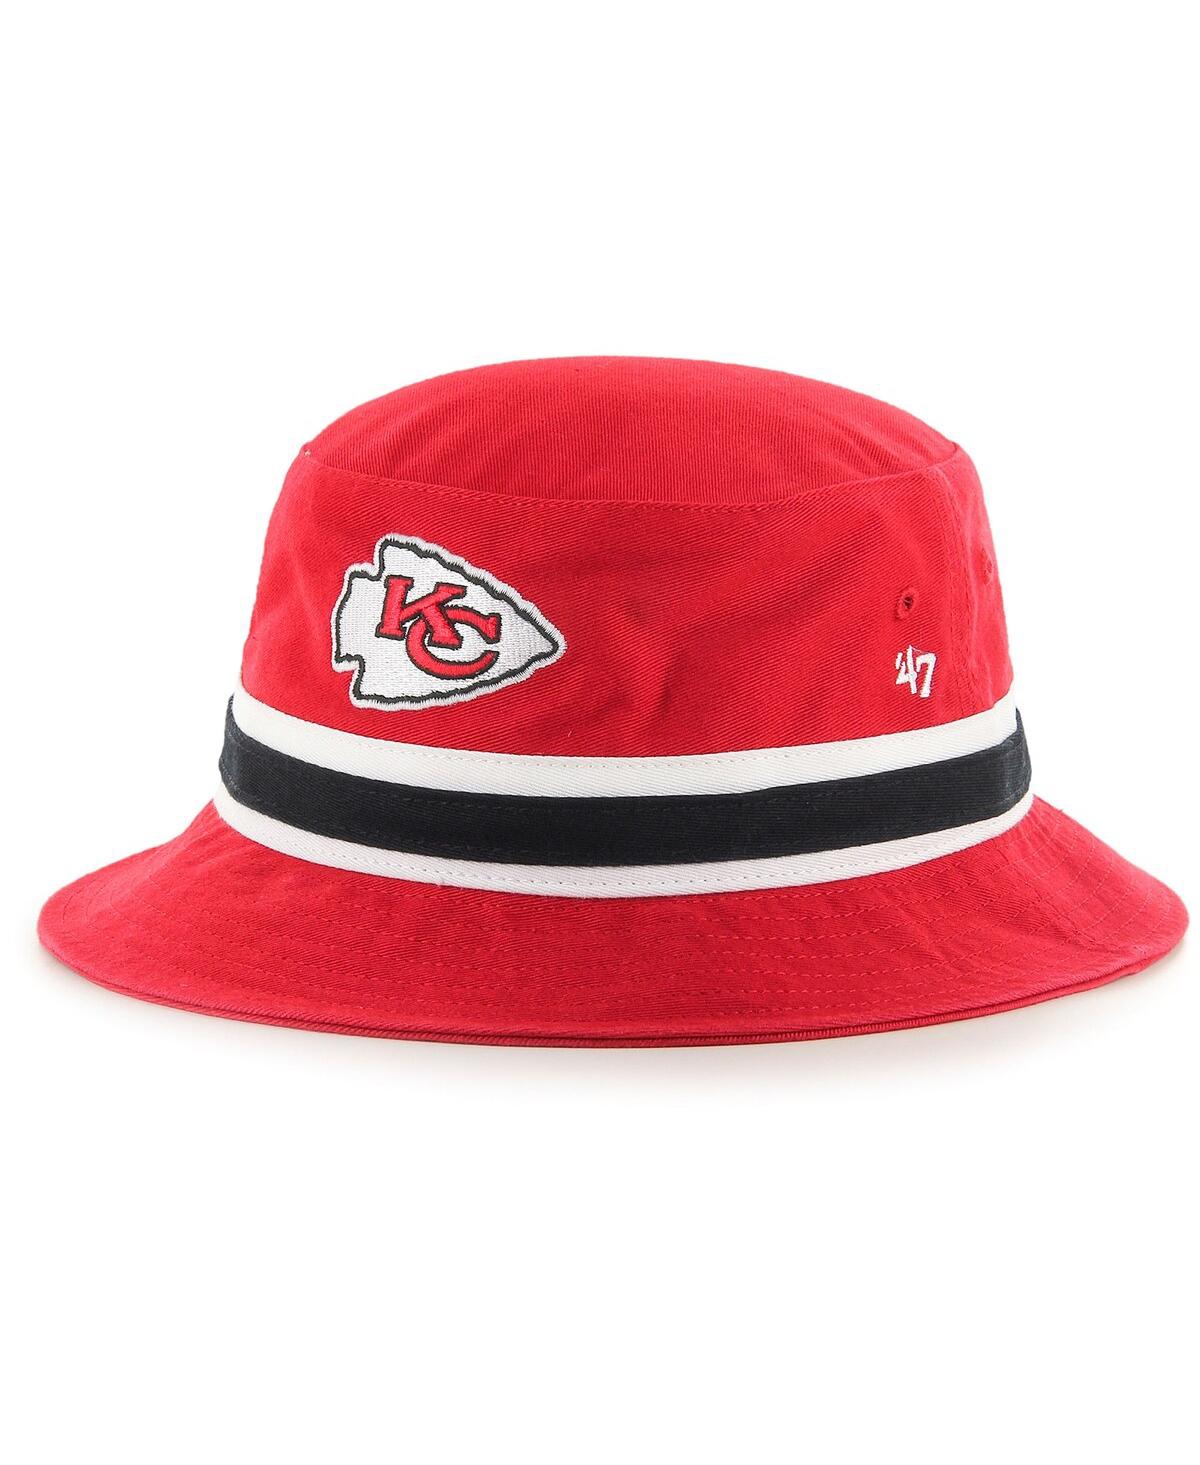 47 Brand Men's '47 Red Kansas City Chiefs Striped Bucket Hat